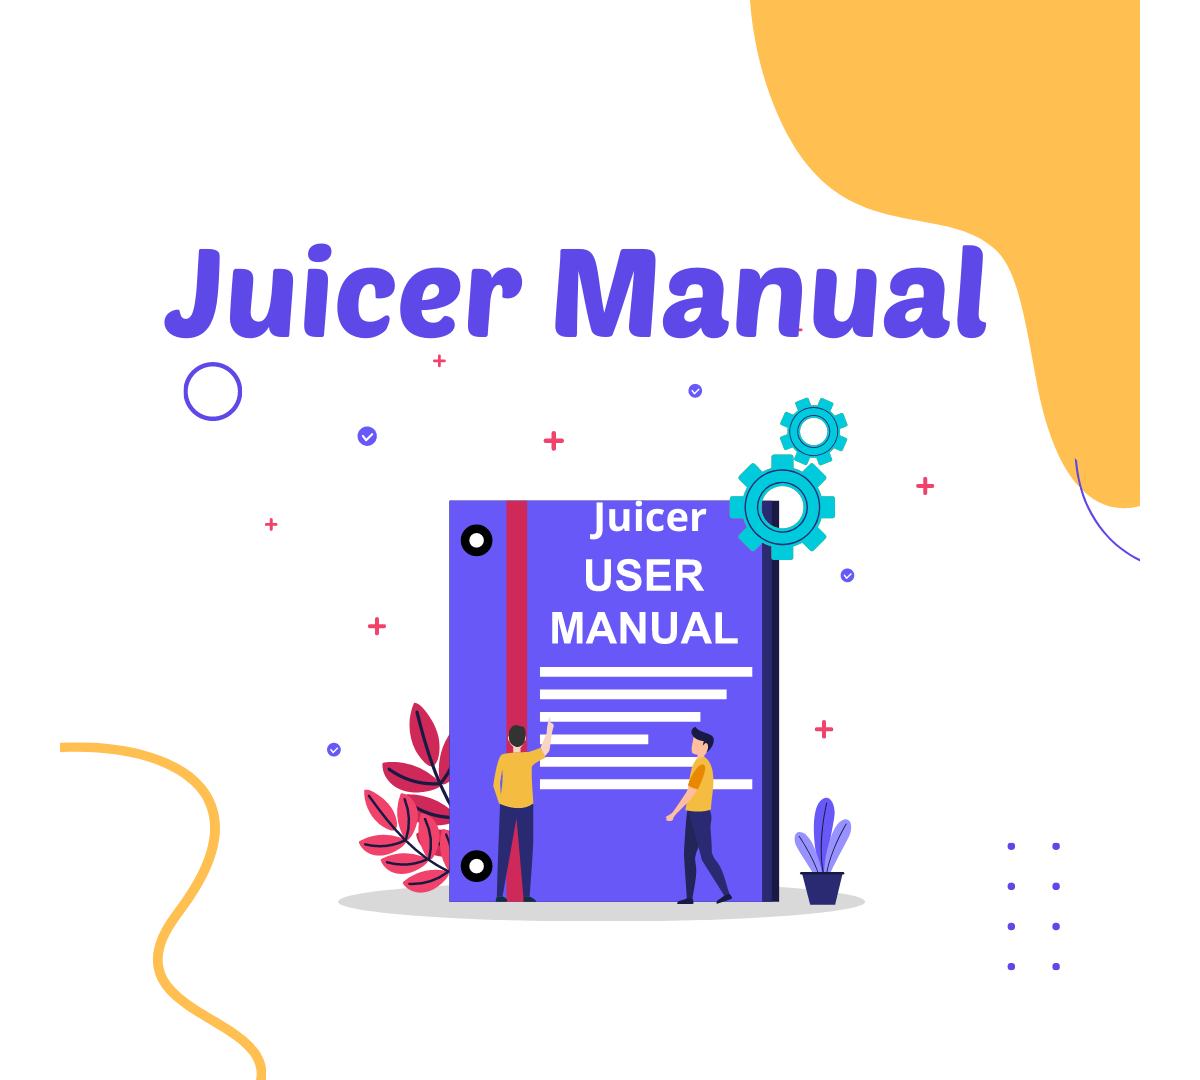 A juicer machine manual